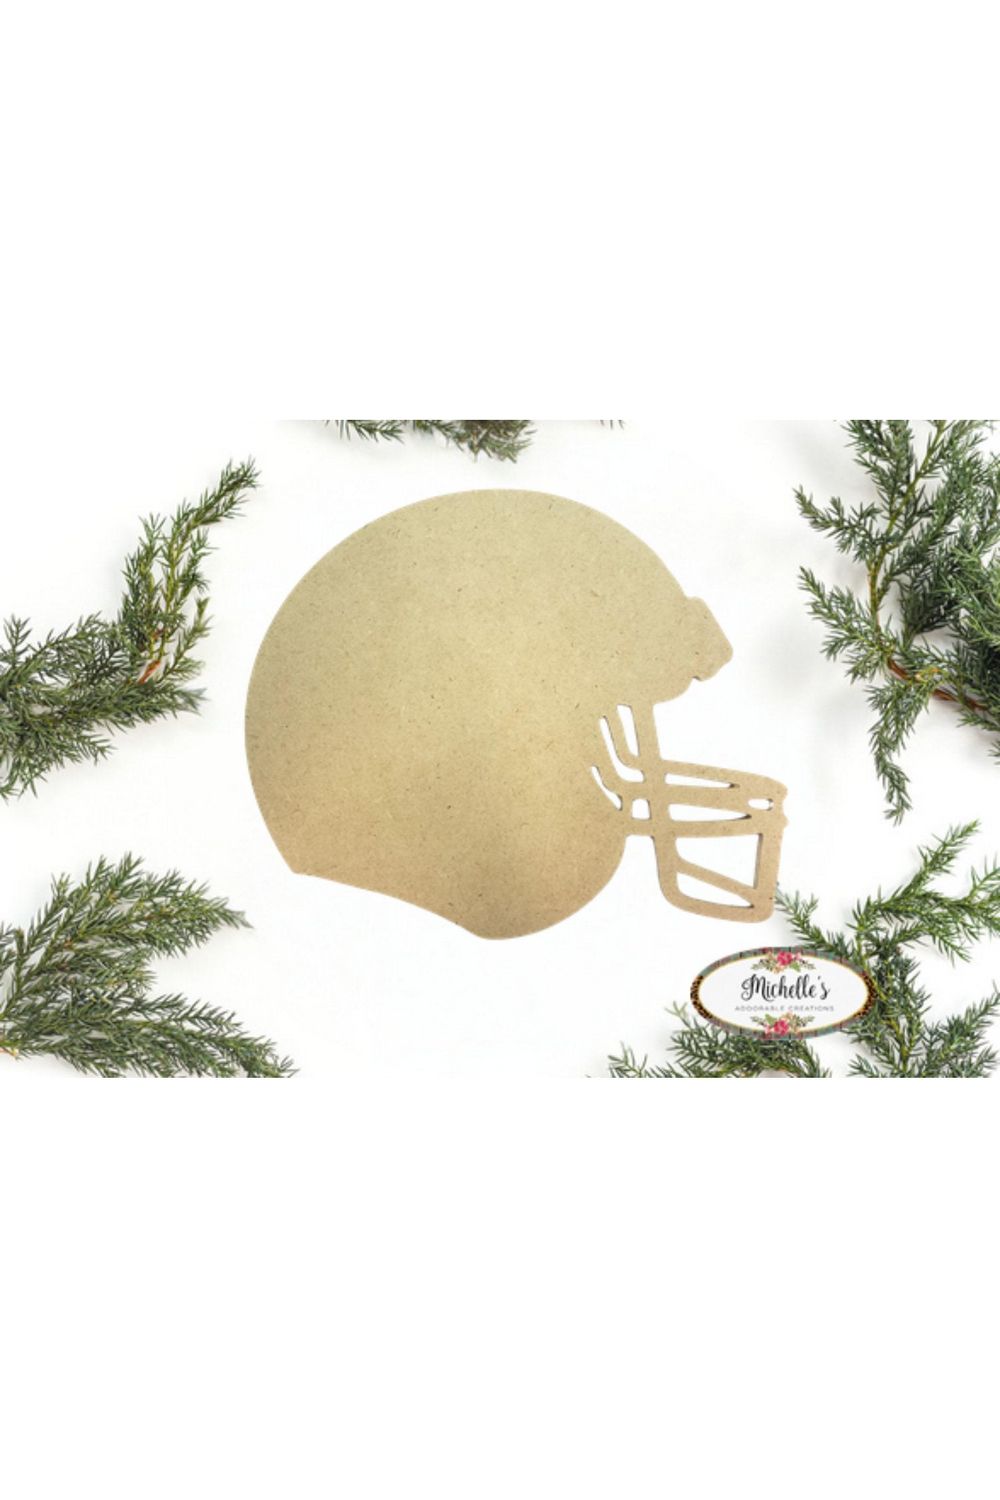 Shop For 12" Unpainted MDF Football Helmet Cutout